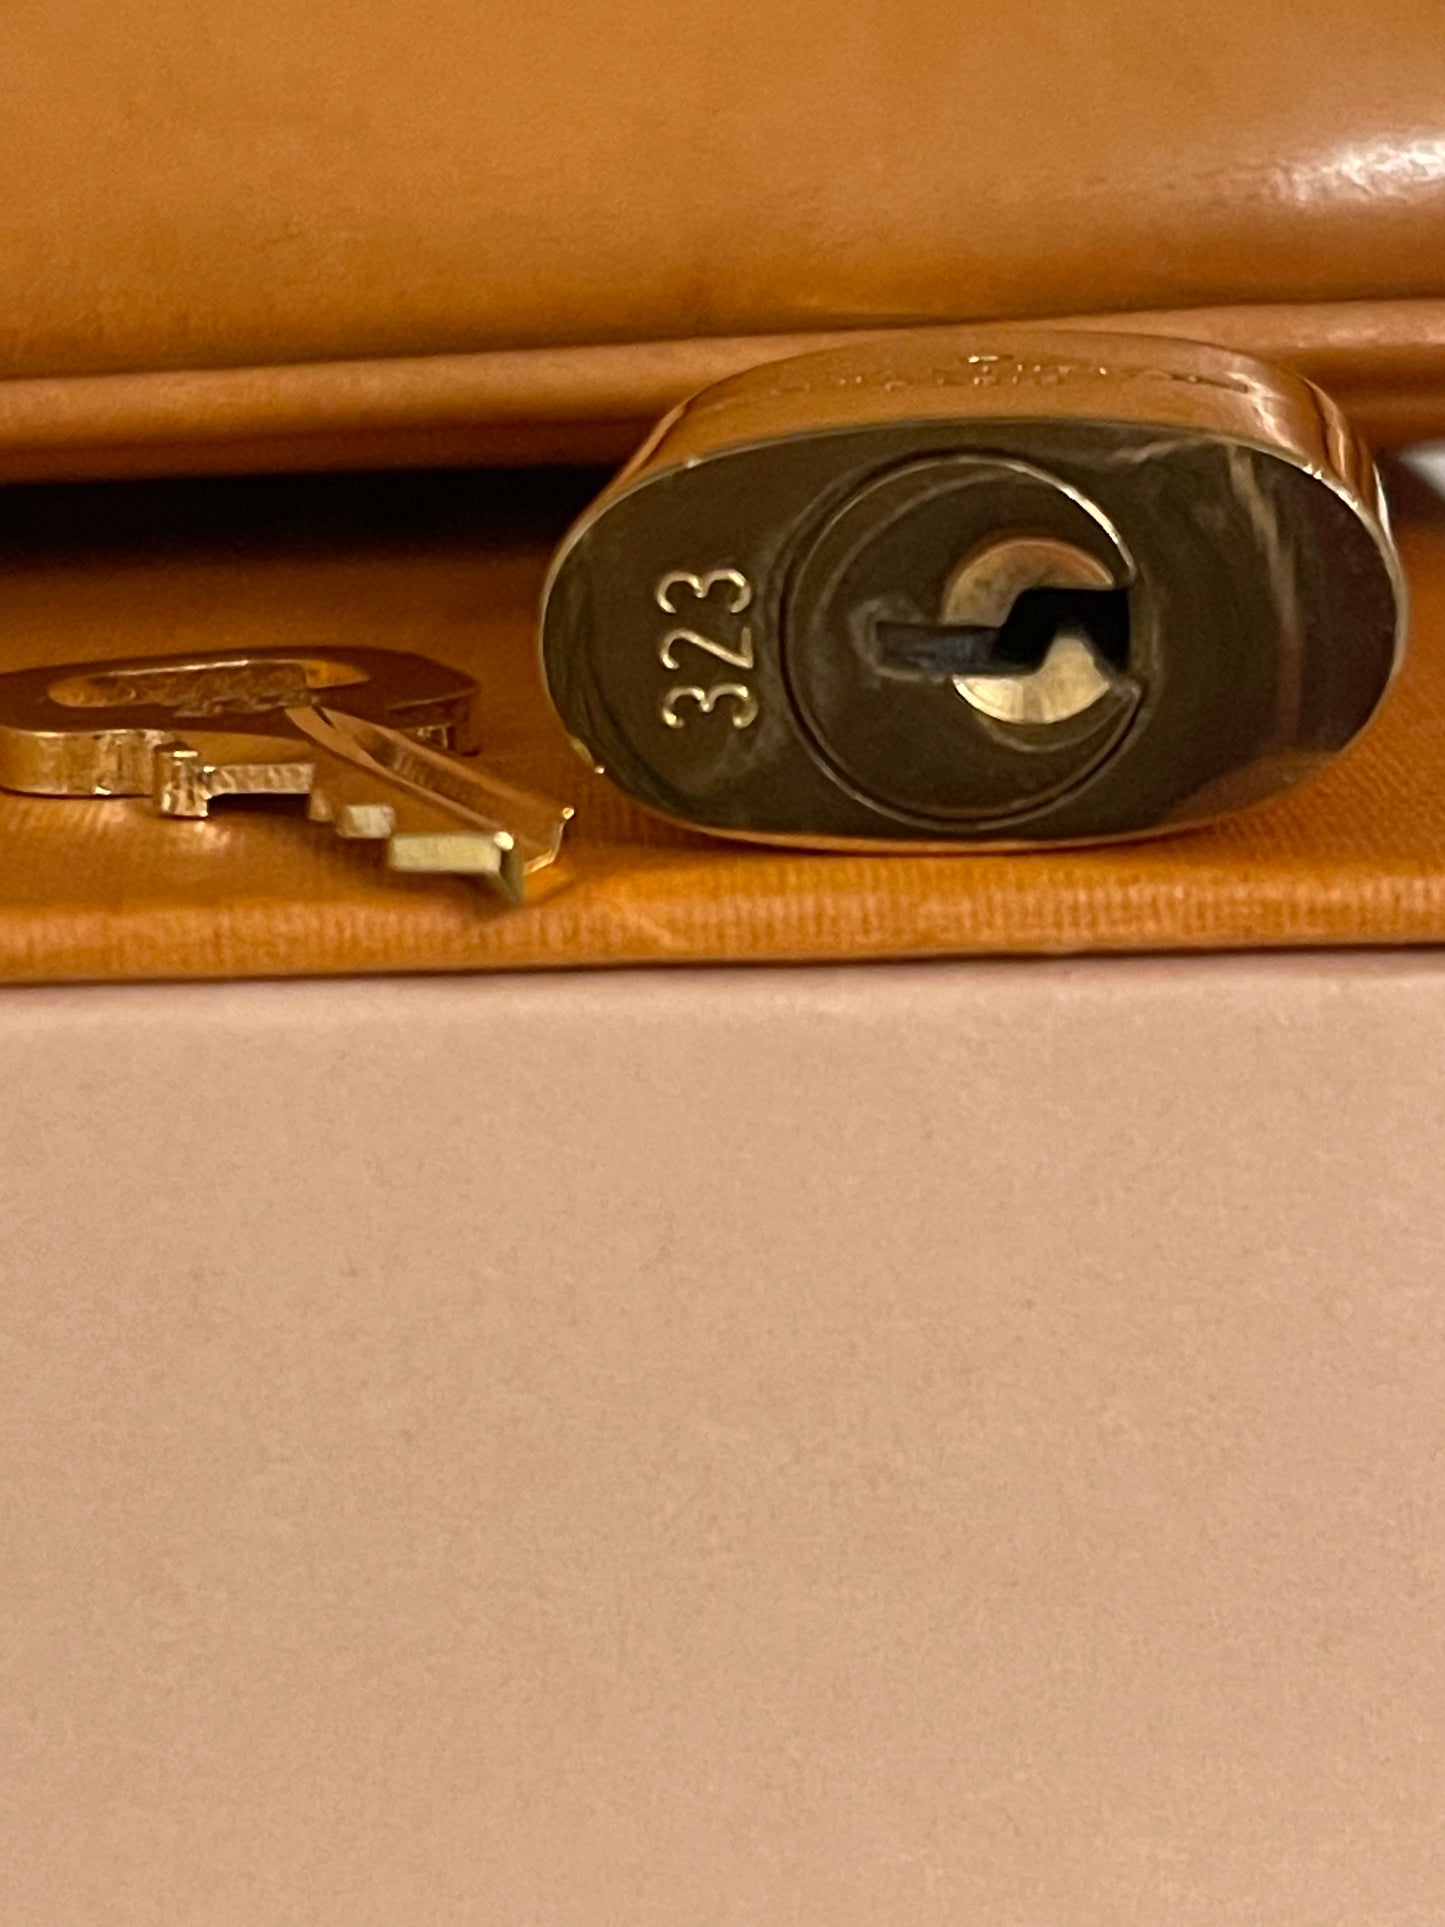 Louis Vuitton Padlock & Key #323